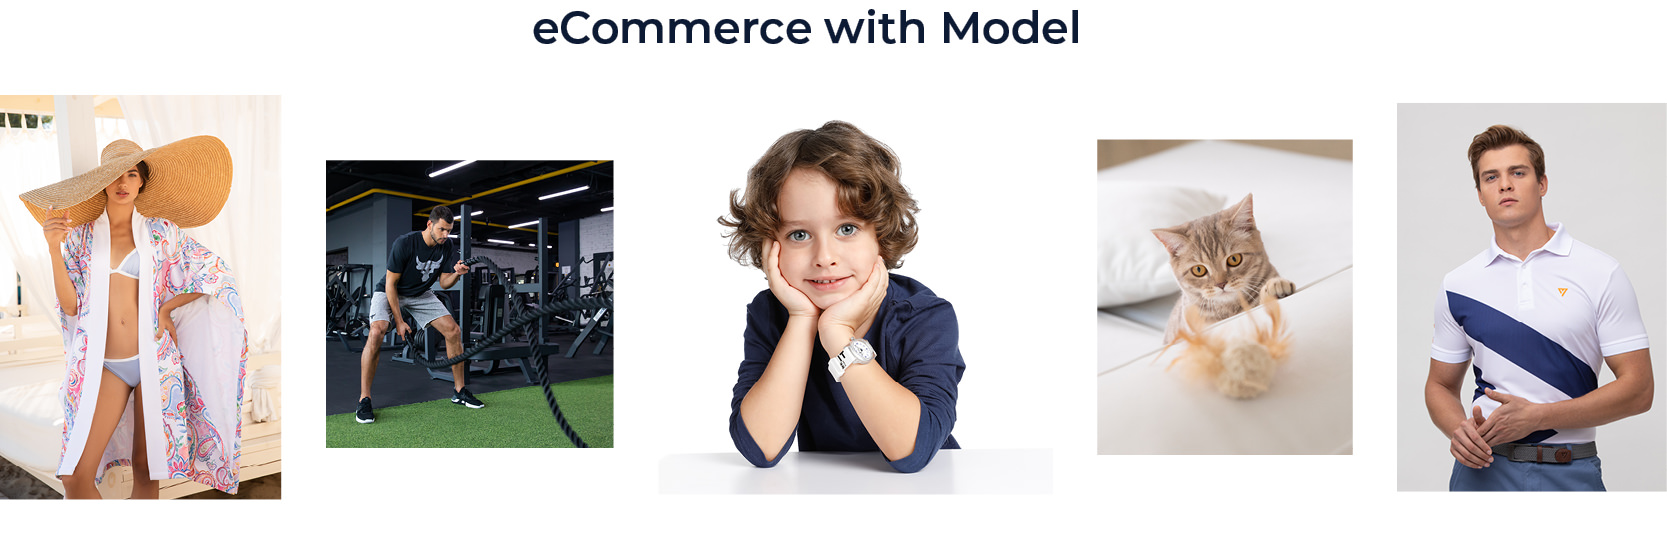 ecommerce model photos